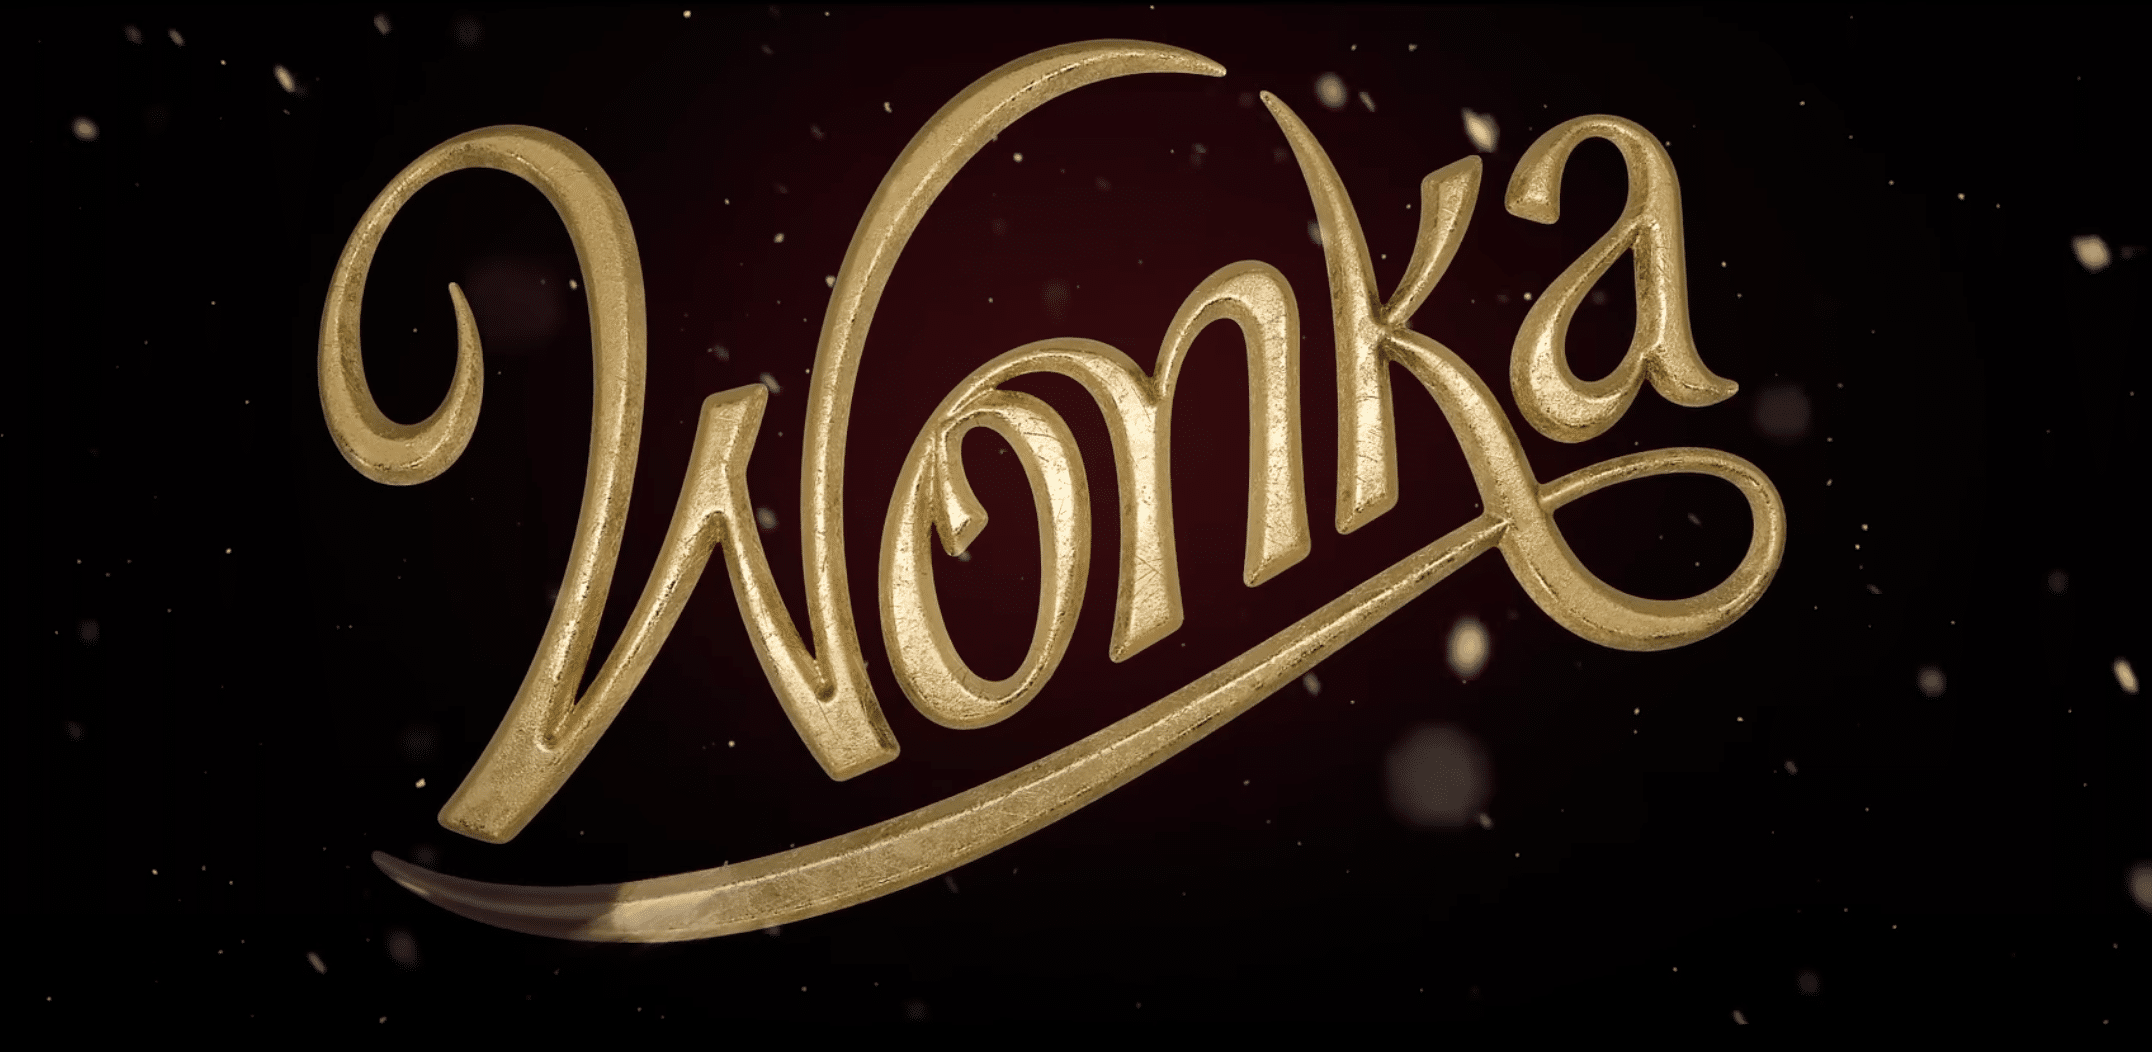 Wonka trailer